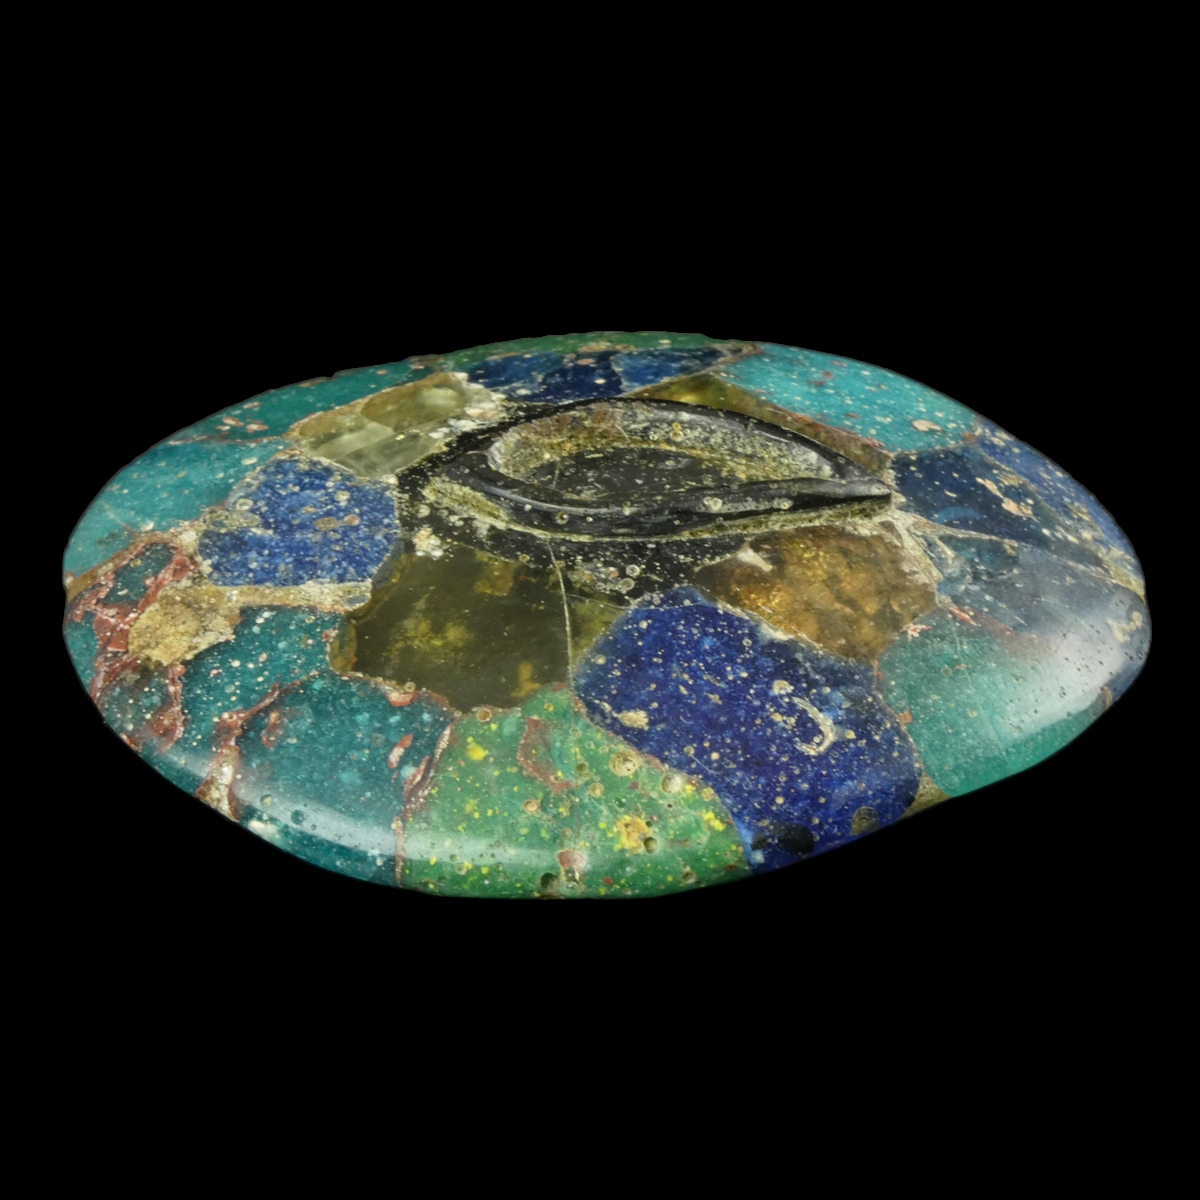 Ancient Roman mosaic glass dish